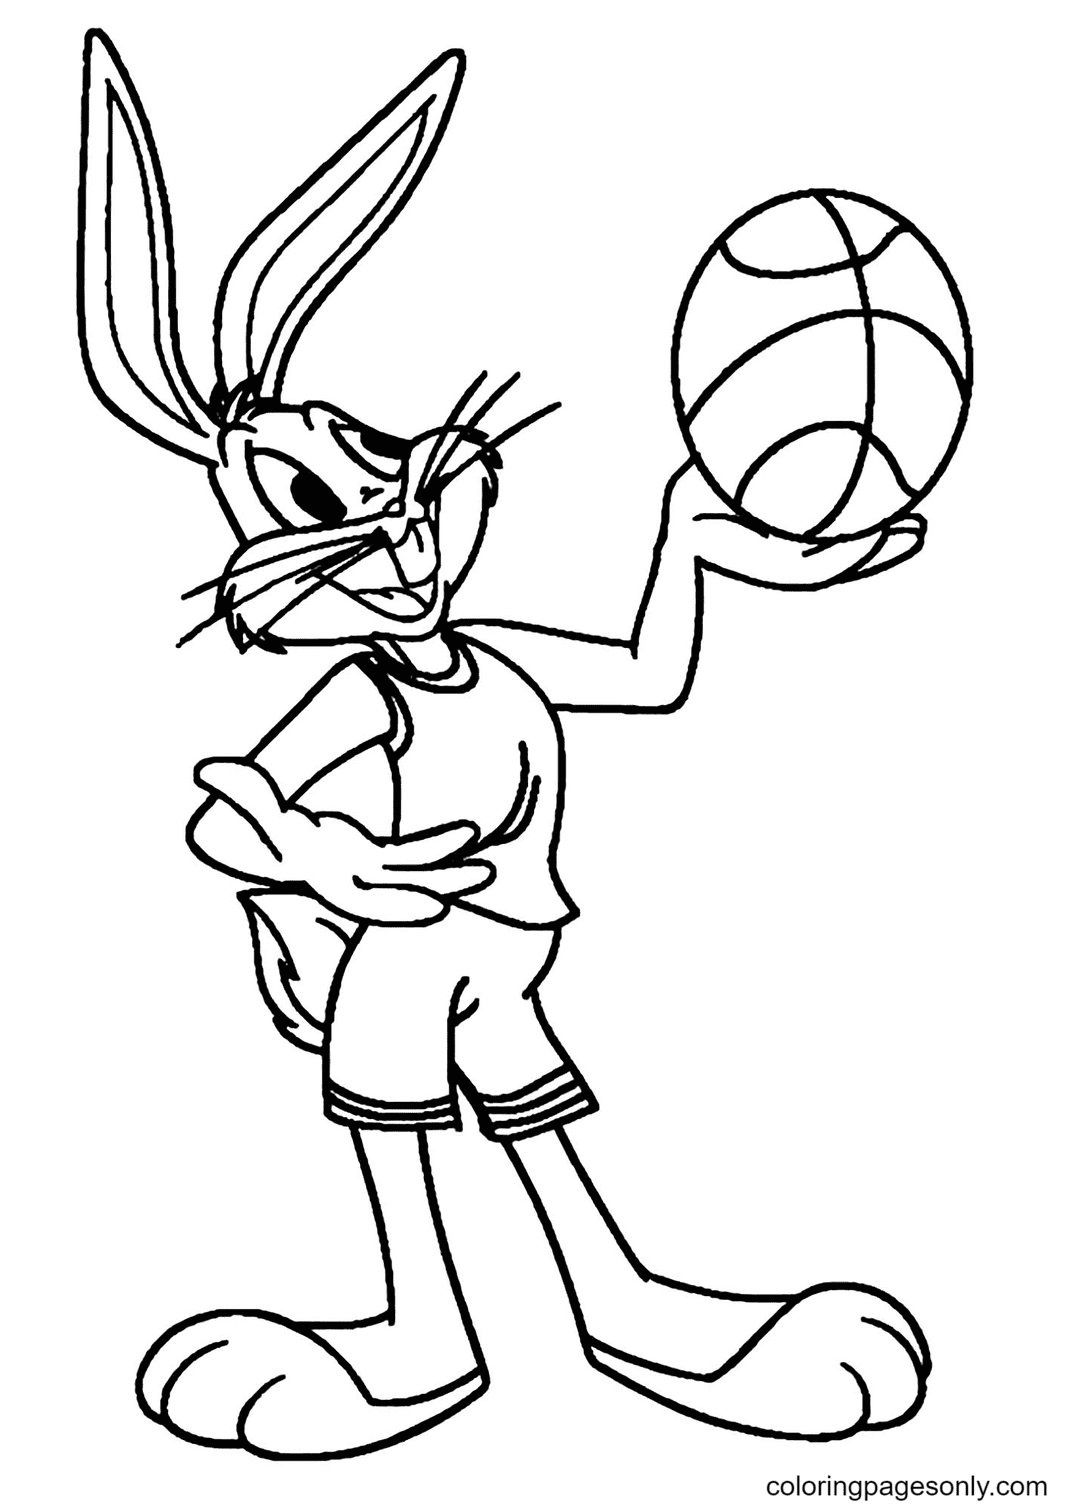 Bugs Bunny hält eine Basketball-Malseite